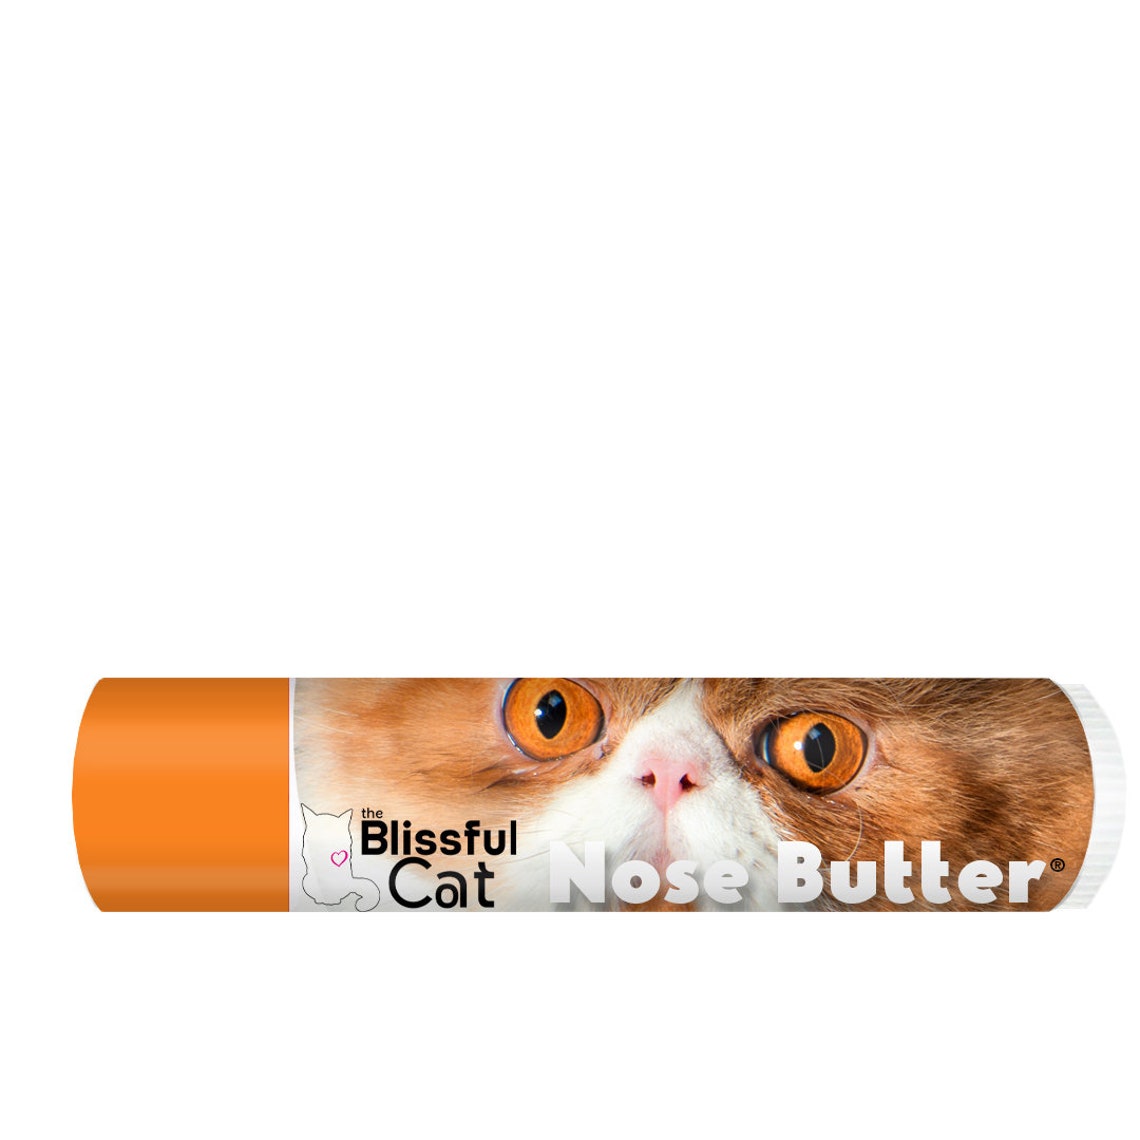 Масло для носа кошек Nose Butter, The Blissful Cat, 4 г